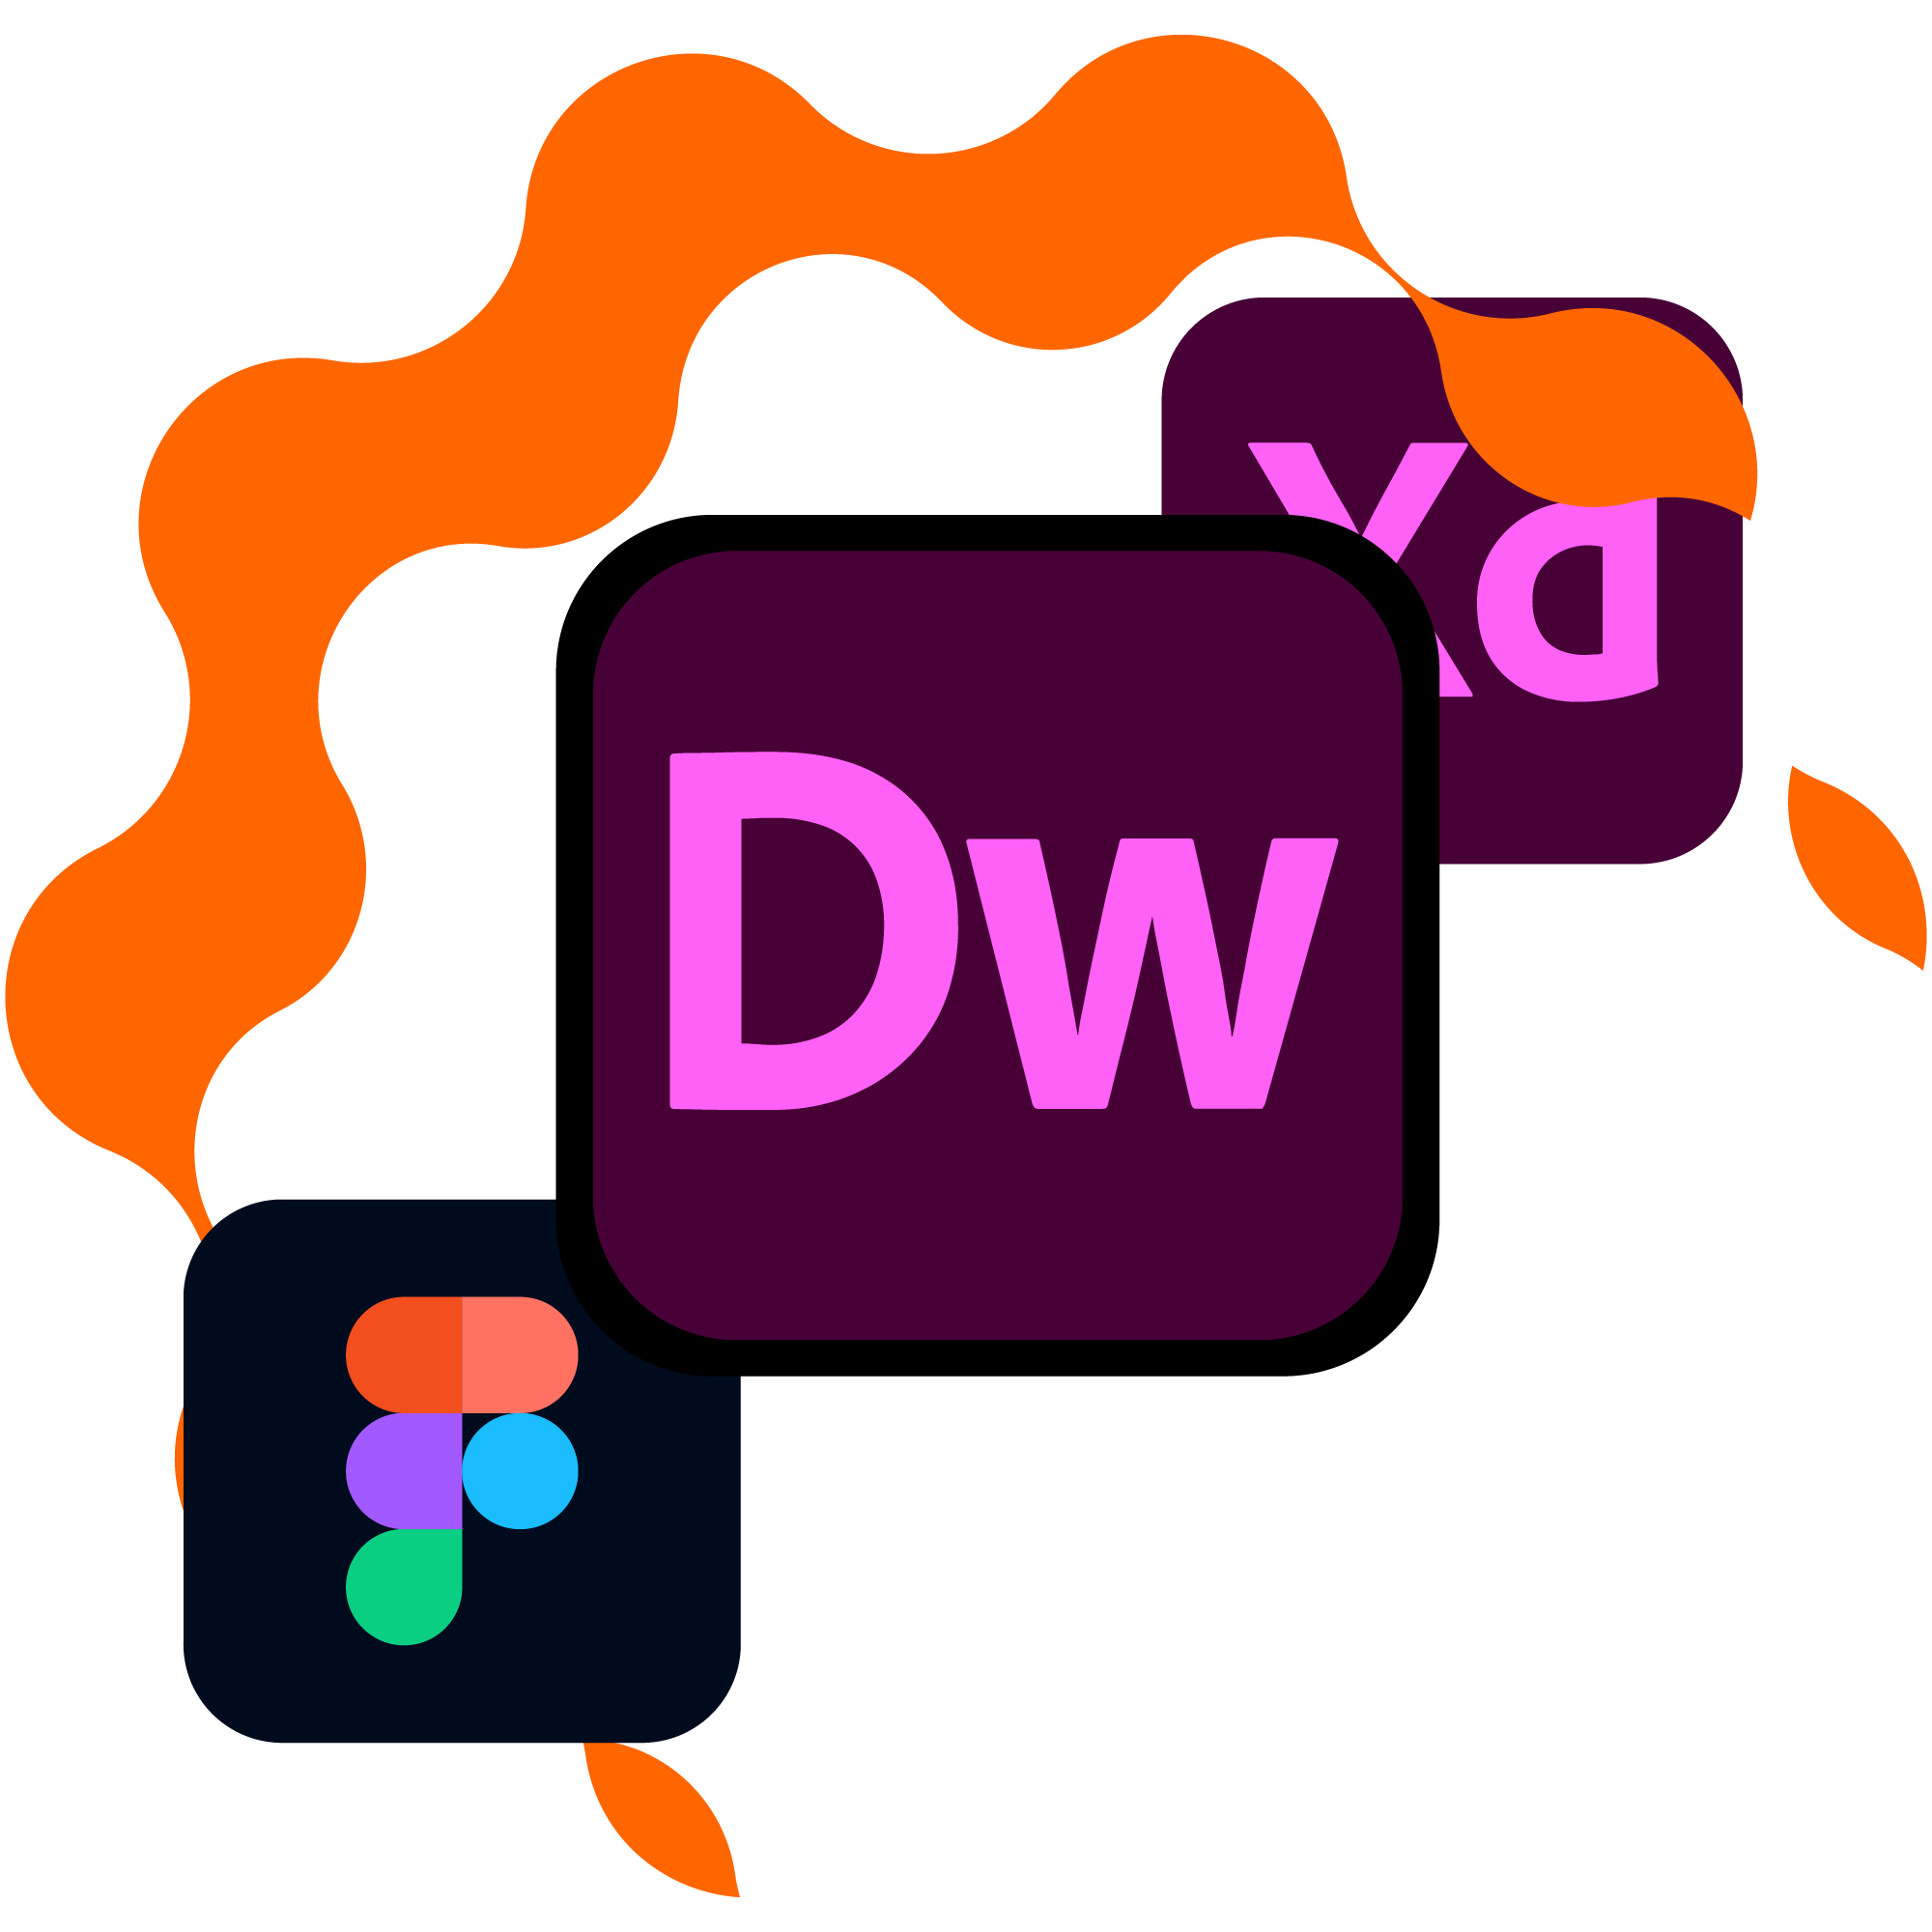 Logos of Adobe applications Dreamweaver, Figma, and Adobe X.D.